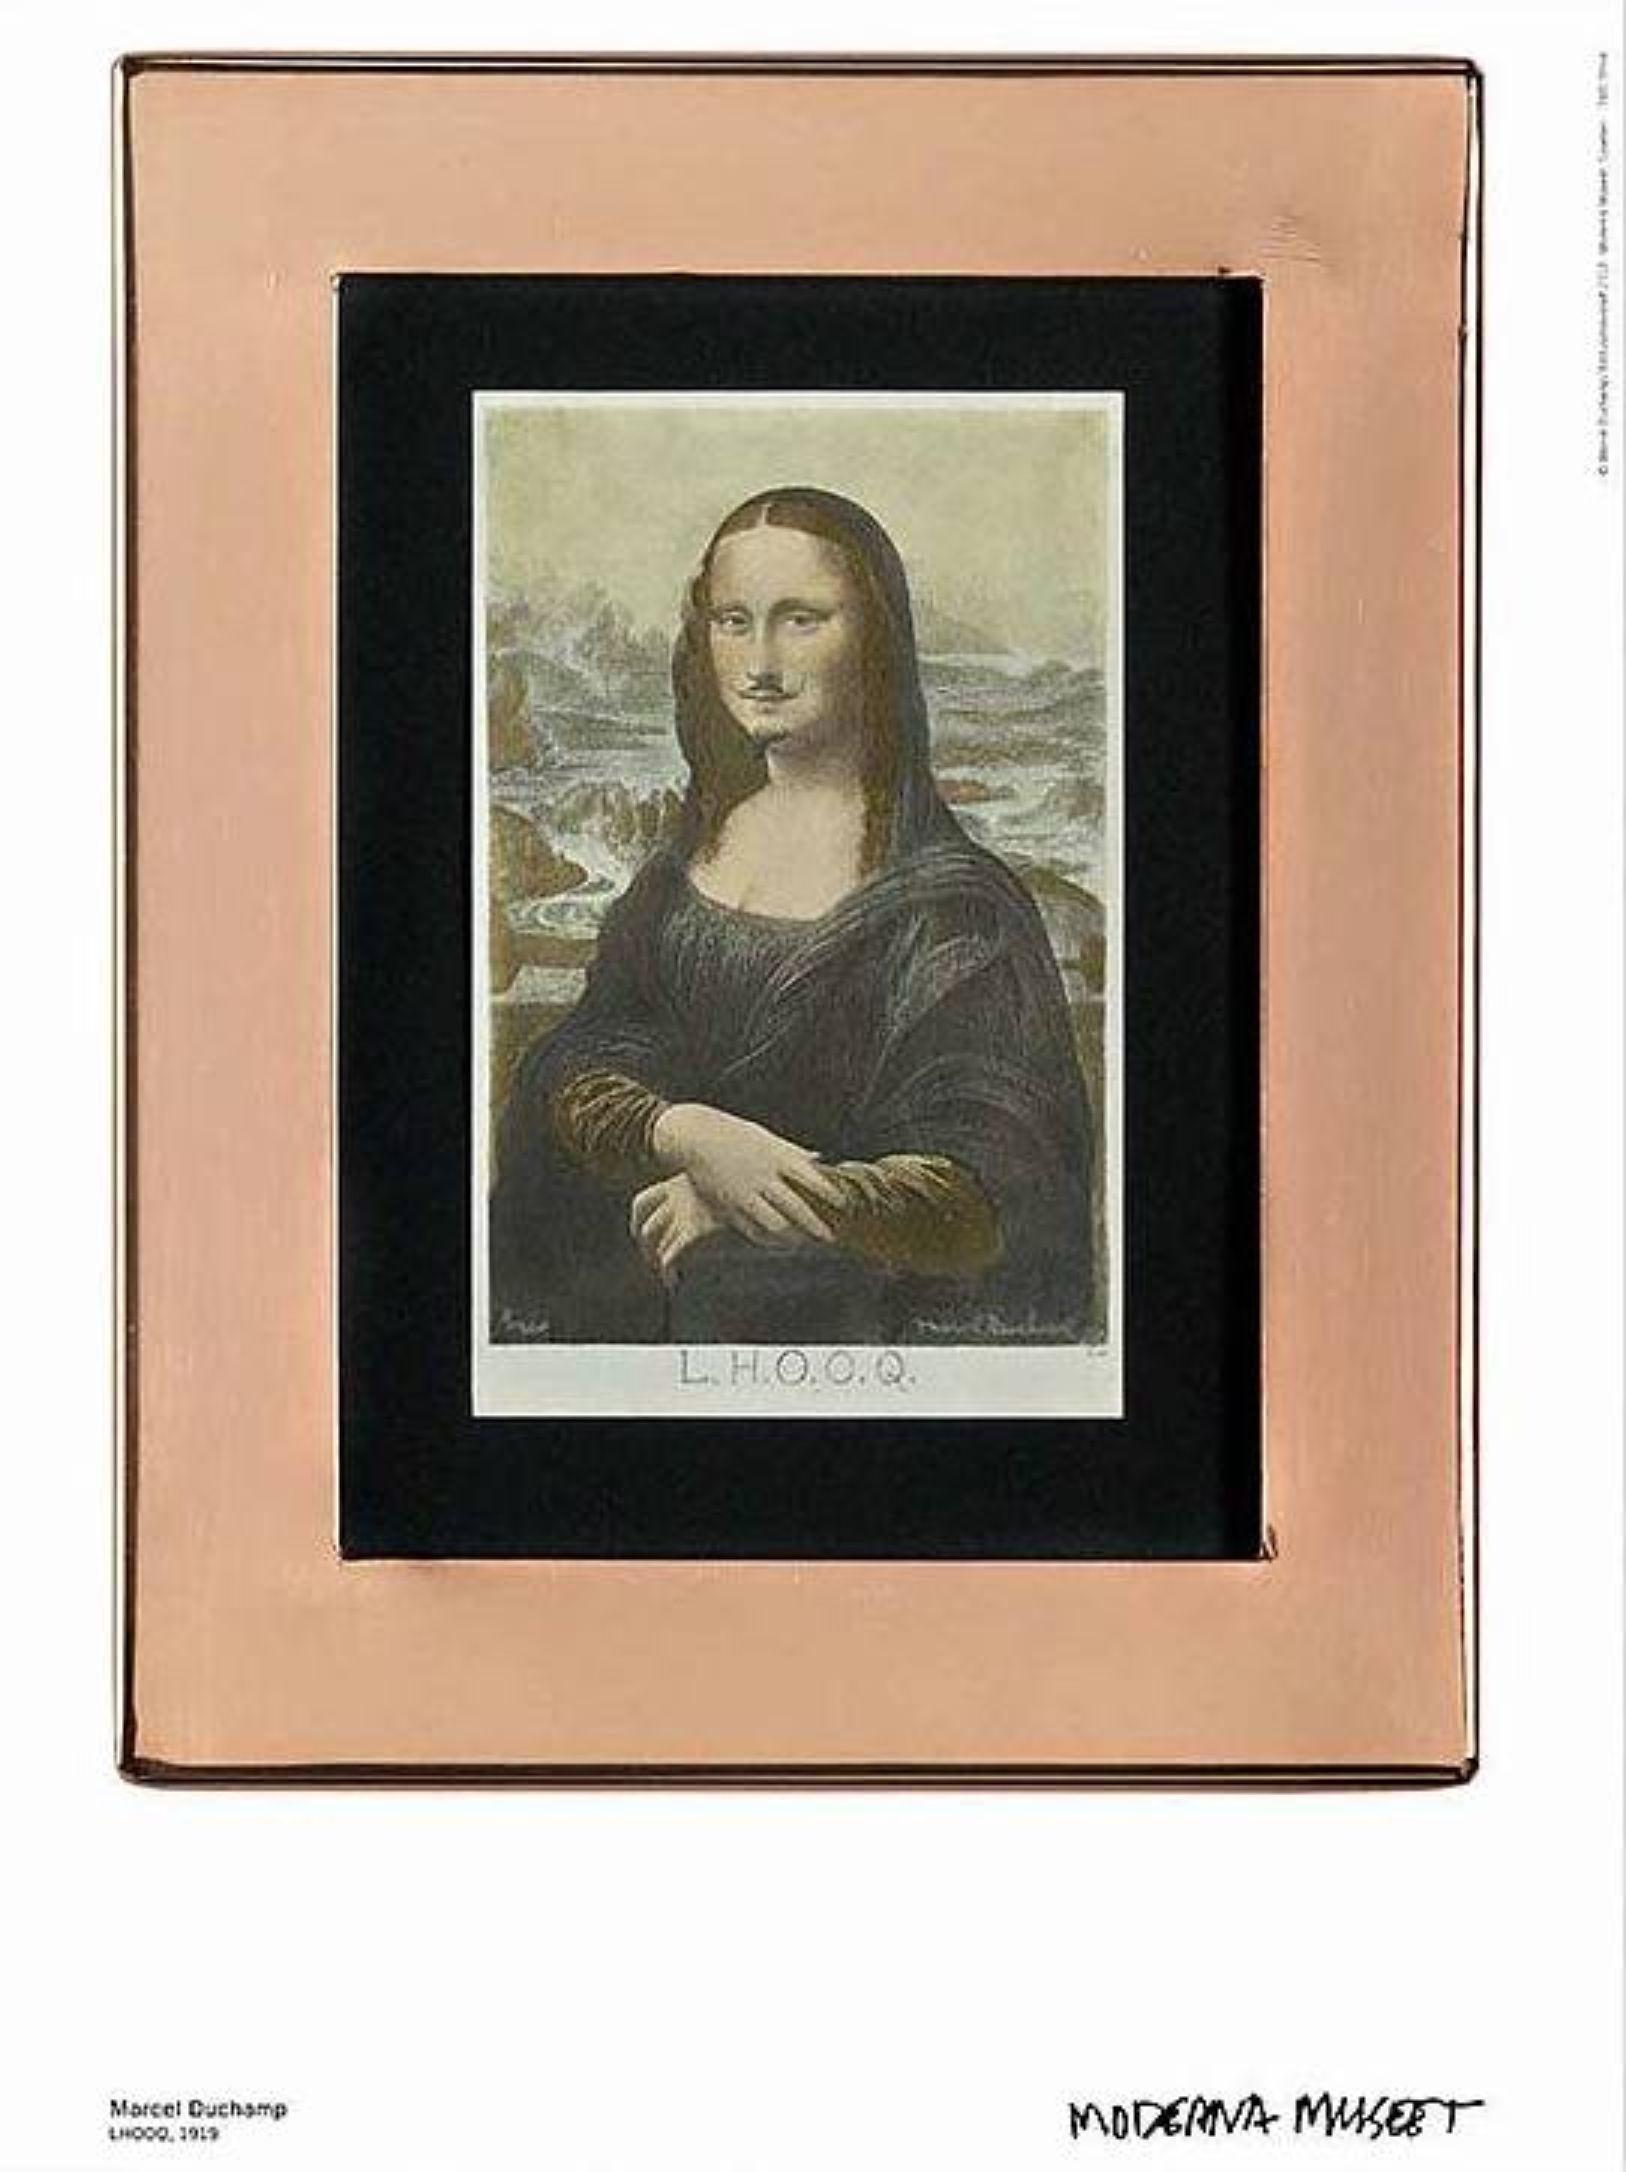 (after) Marcel Duchamp Portrait Print - LHOOQ, Small Museum Poster, Surrealist, Humor, Mona Lisa